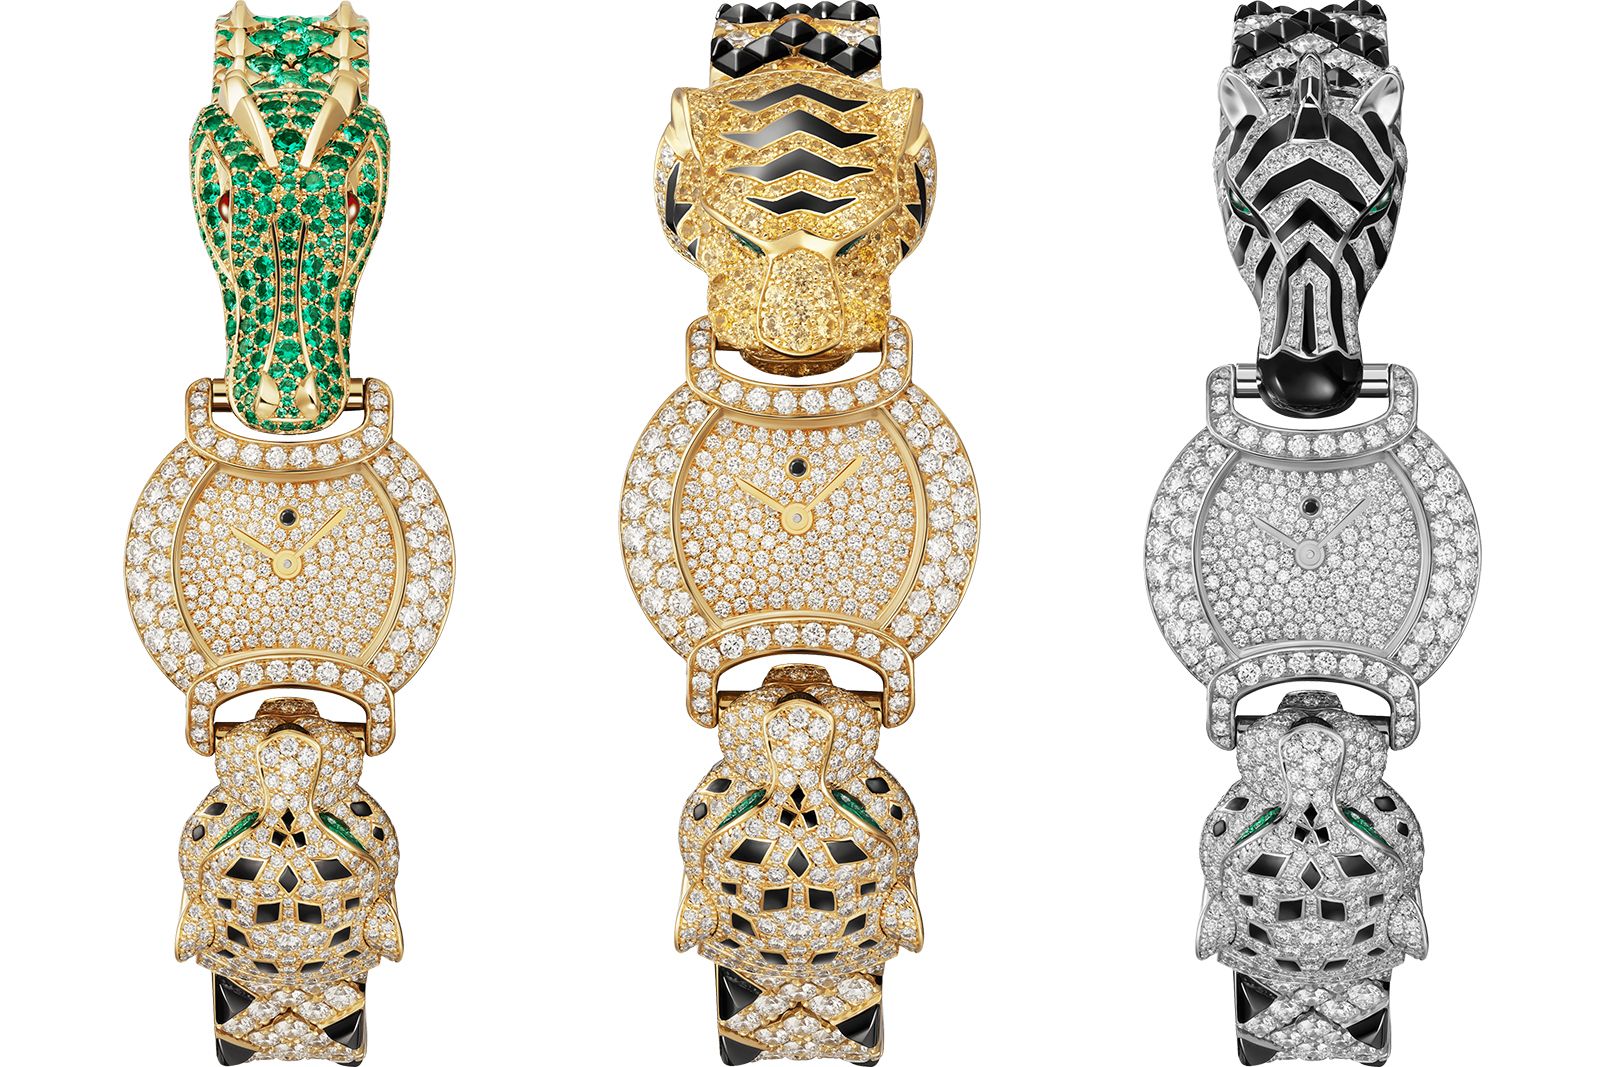 3 various models of Indomptables de Cartier watches